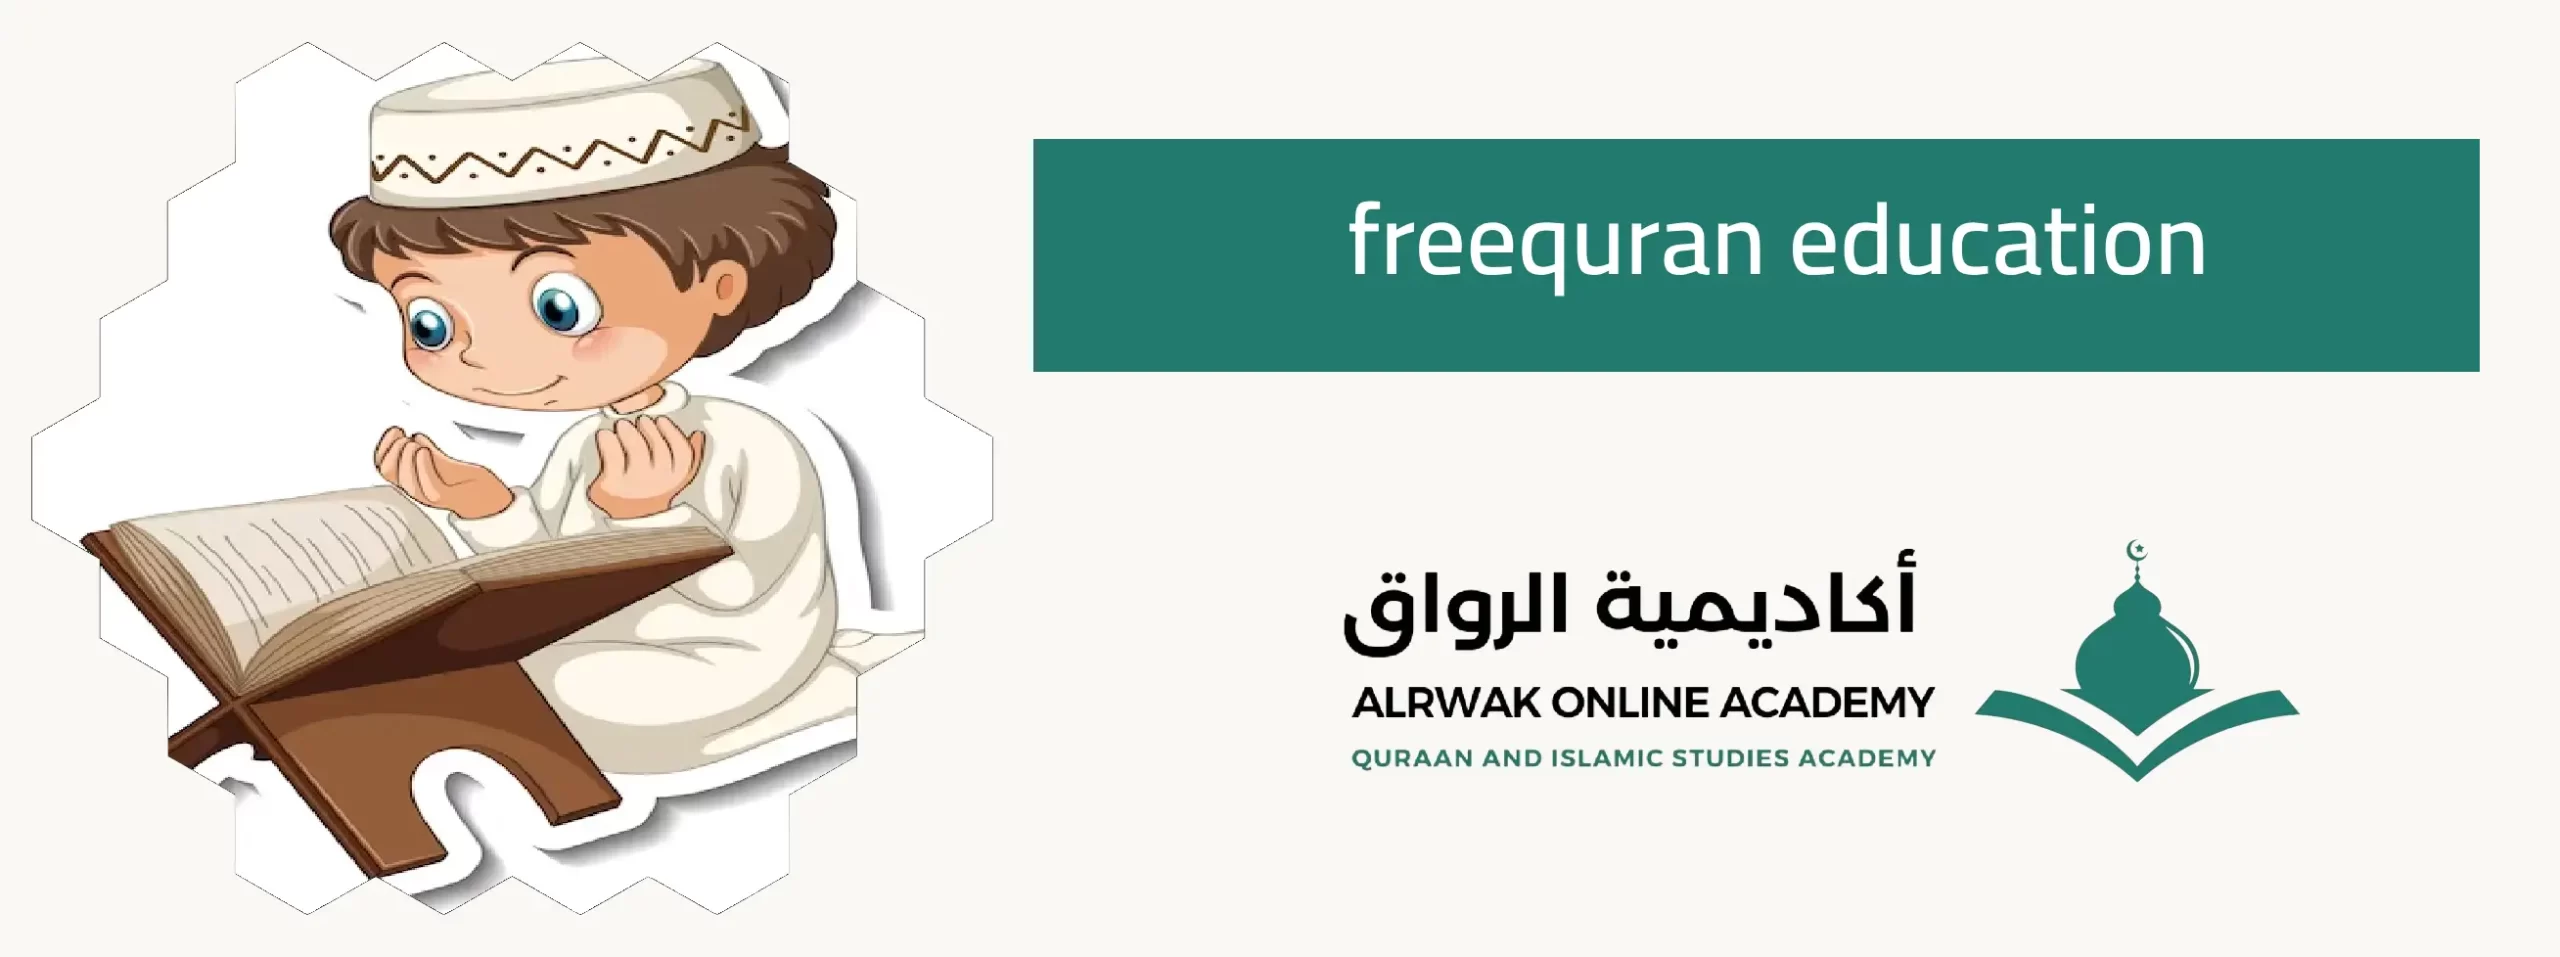 Free Quran Education website